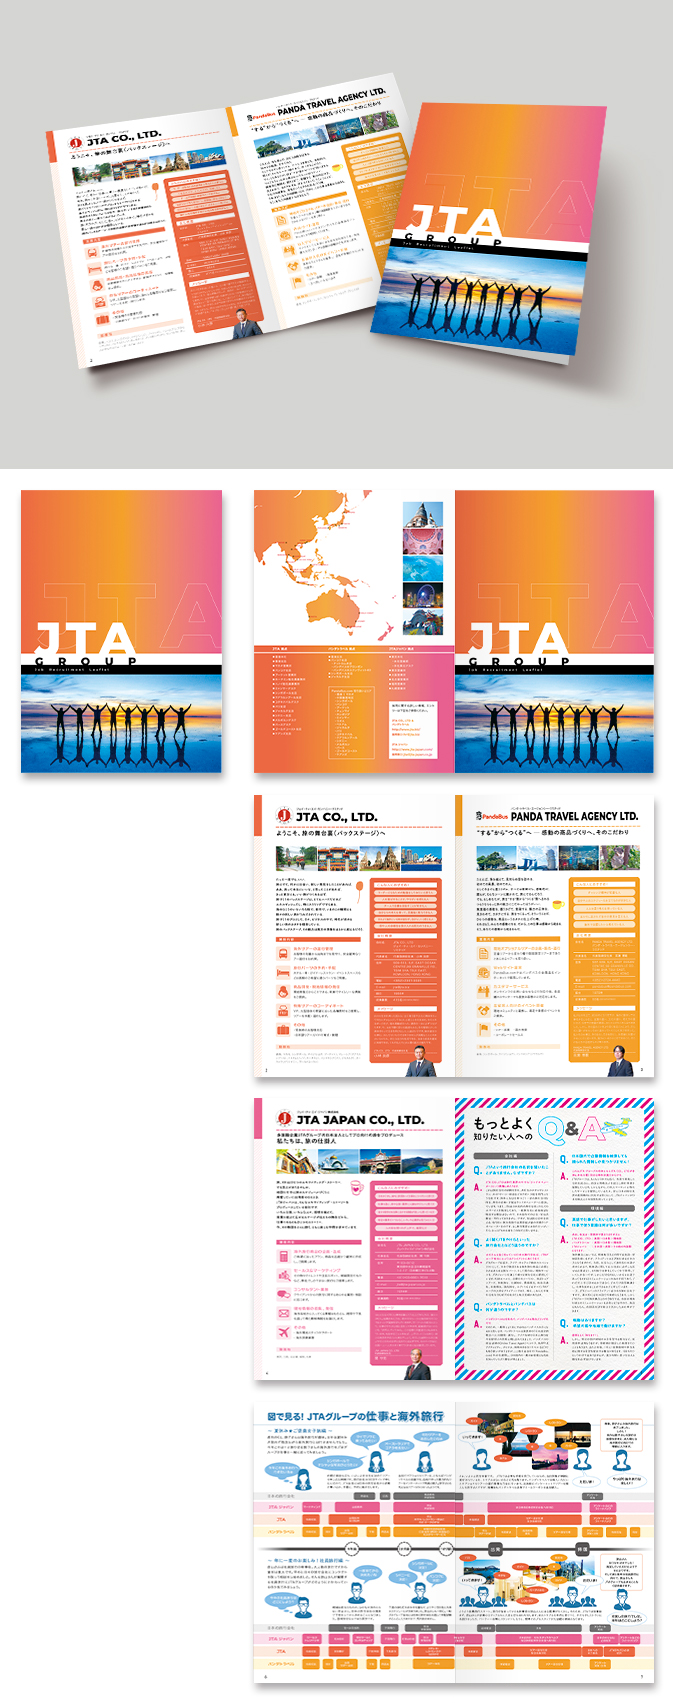 JTA CO., LTDパンフレットデザイン